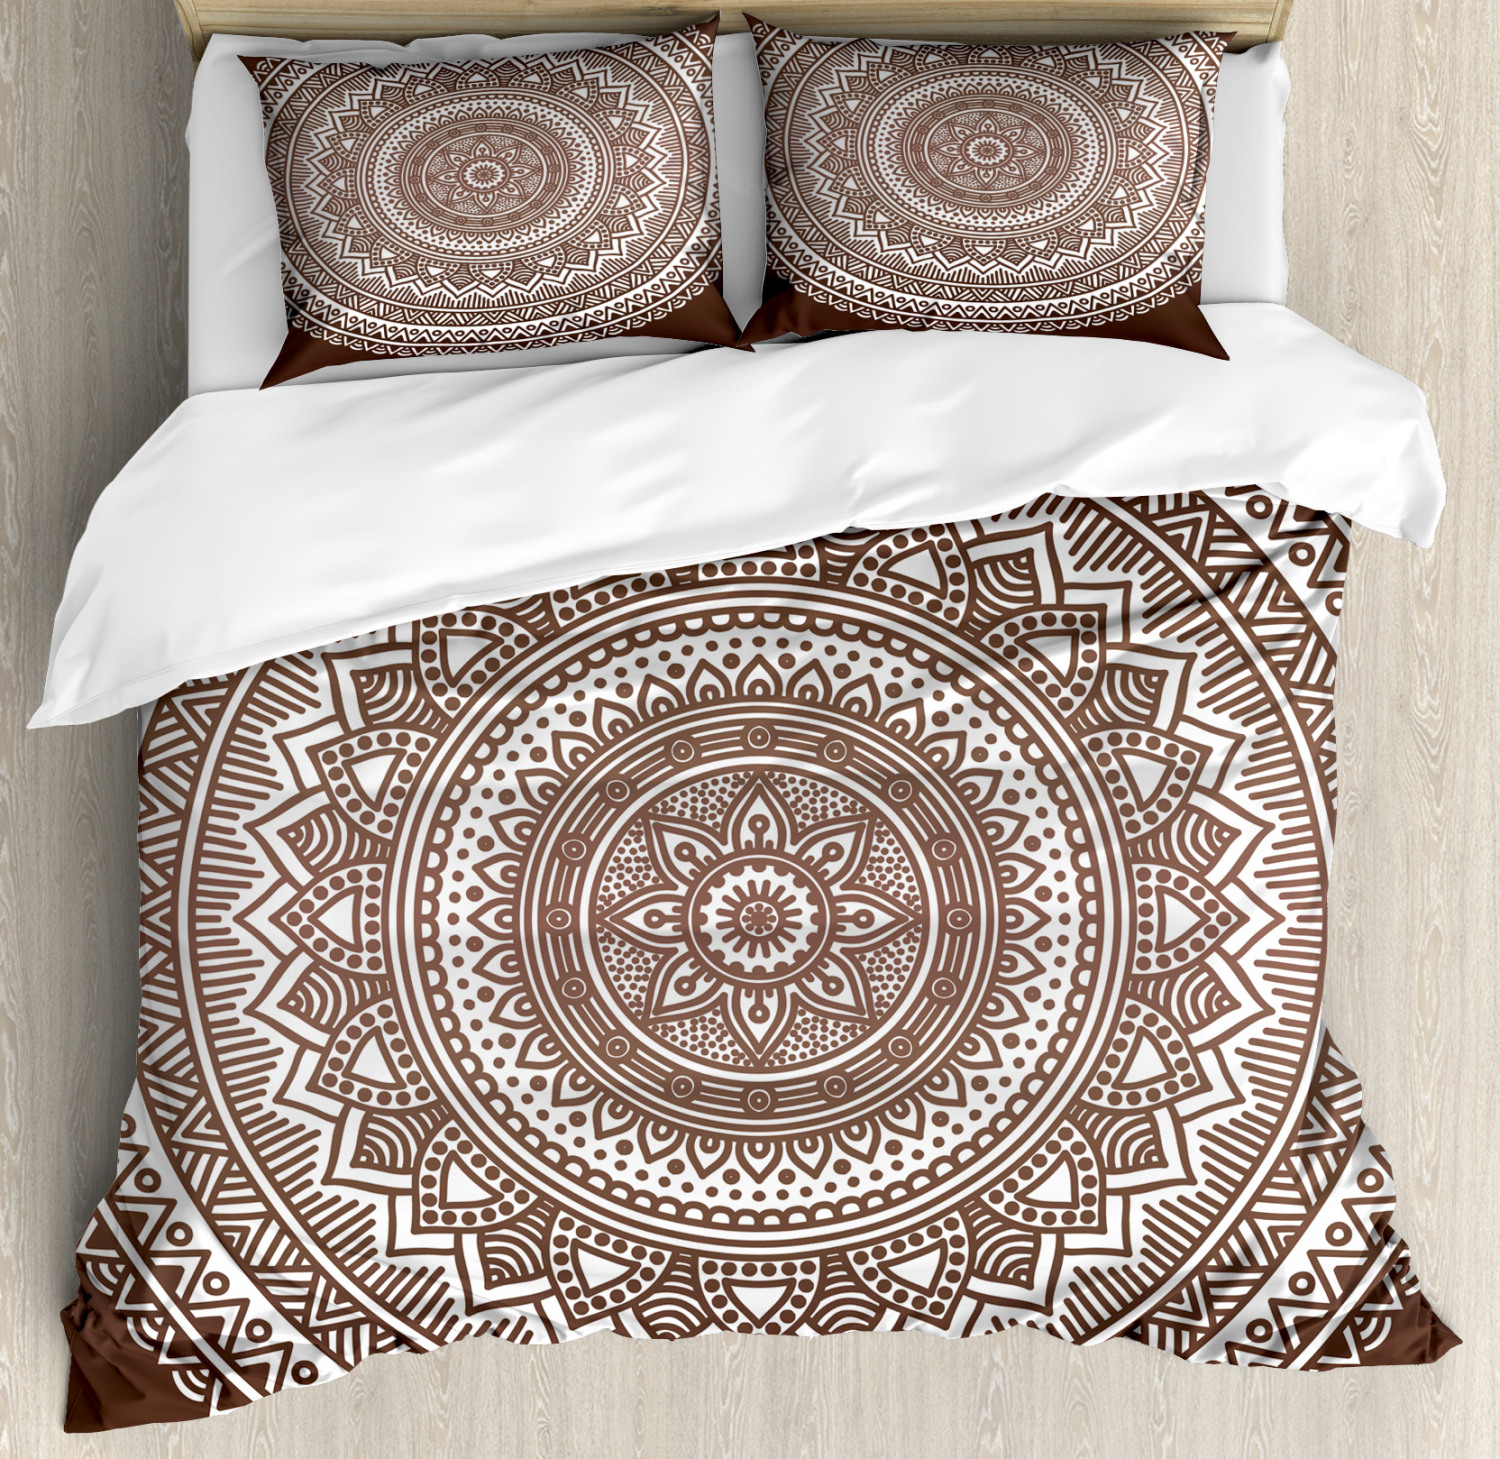 Ethnic Duvet Cover Set With Pillow Shams Detailed Round Flower